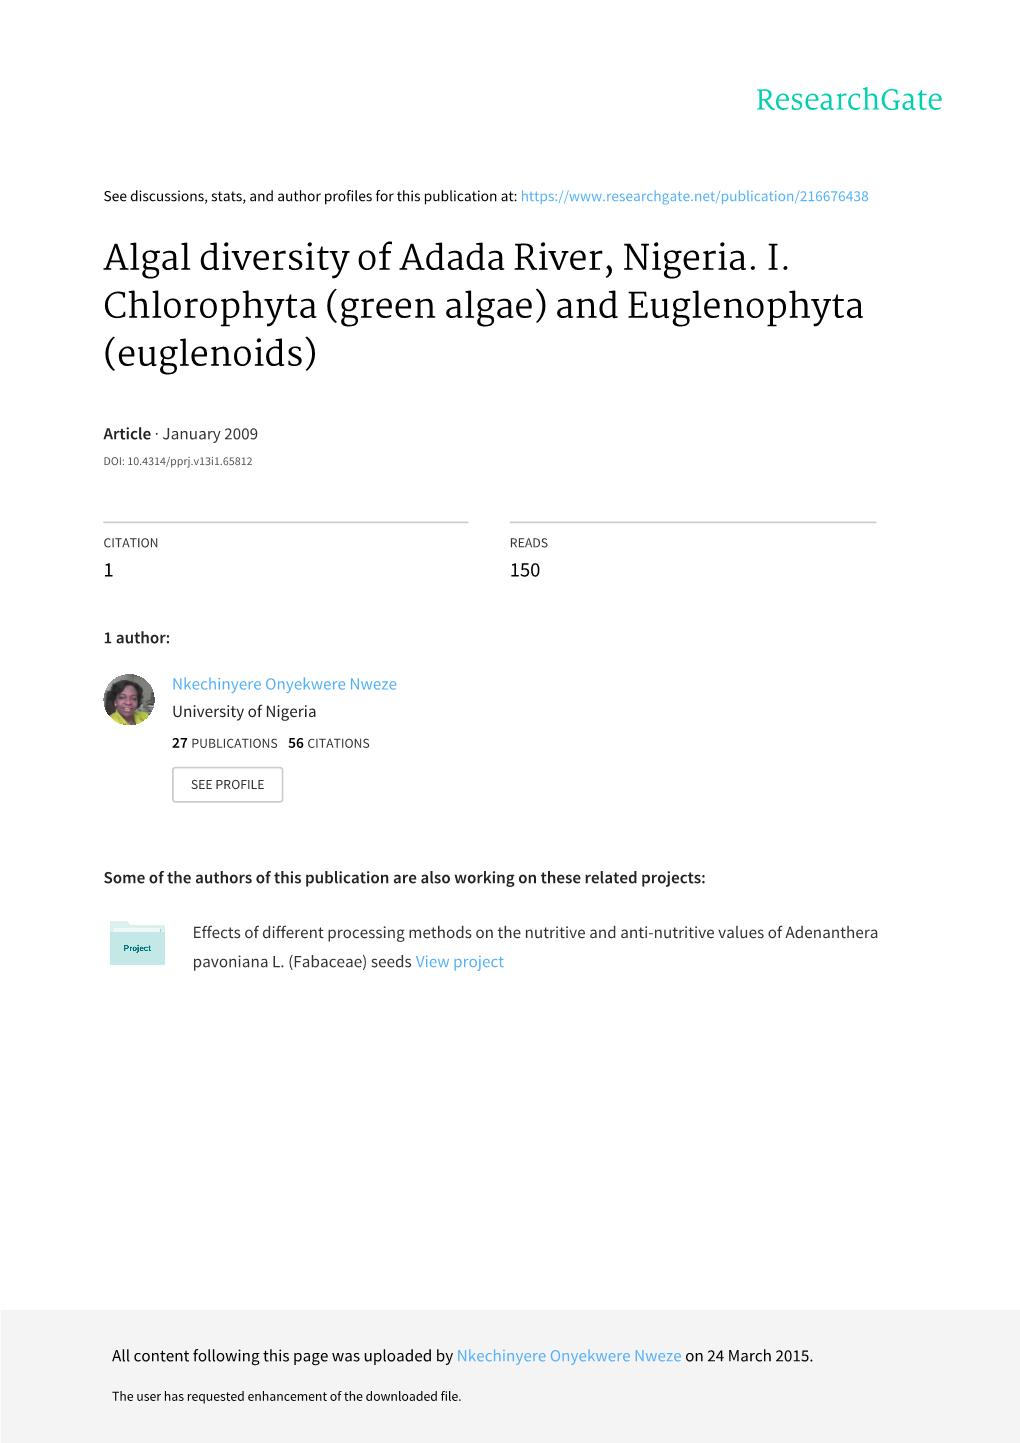 Algal Diversity of Adada River, Nigeria. I. Chlorophyta (Green Algae) and Euglenophyta (Euglenoids)